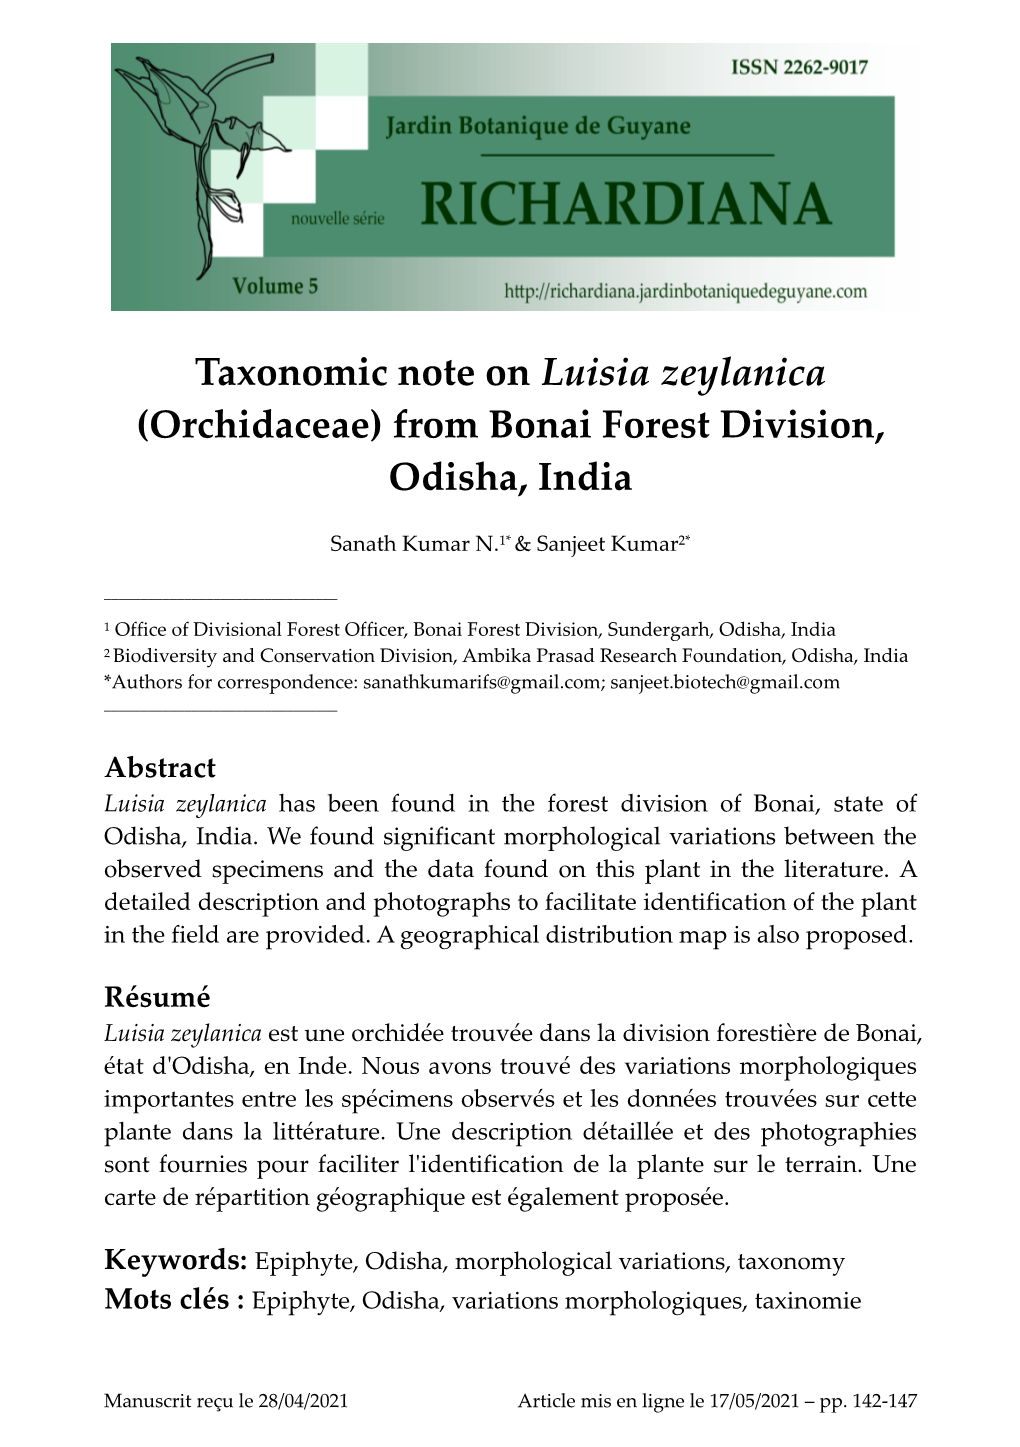 Taxonomic Note on Luisia Zeylanica (Orchidaceae) from Bonai Forest Division, Odisha, India